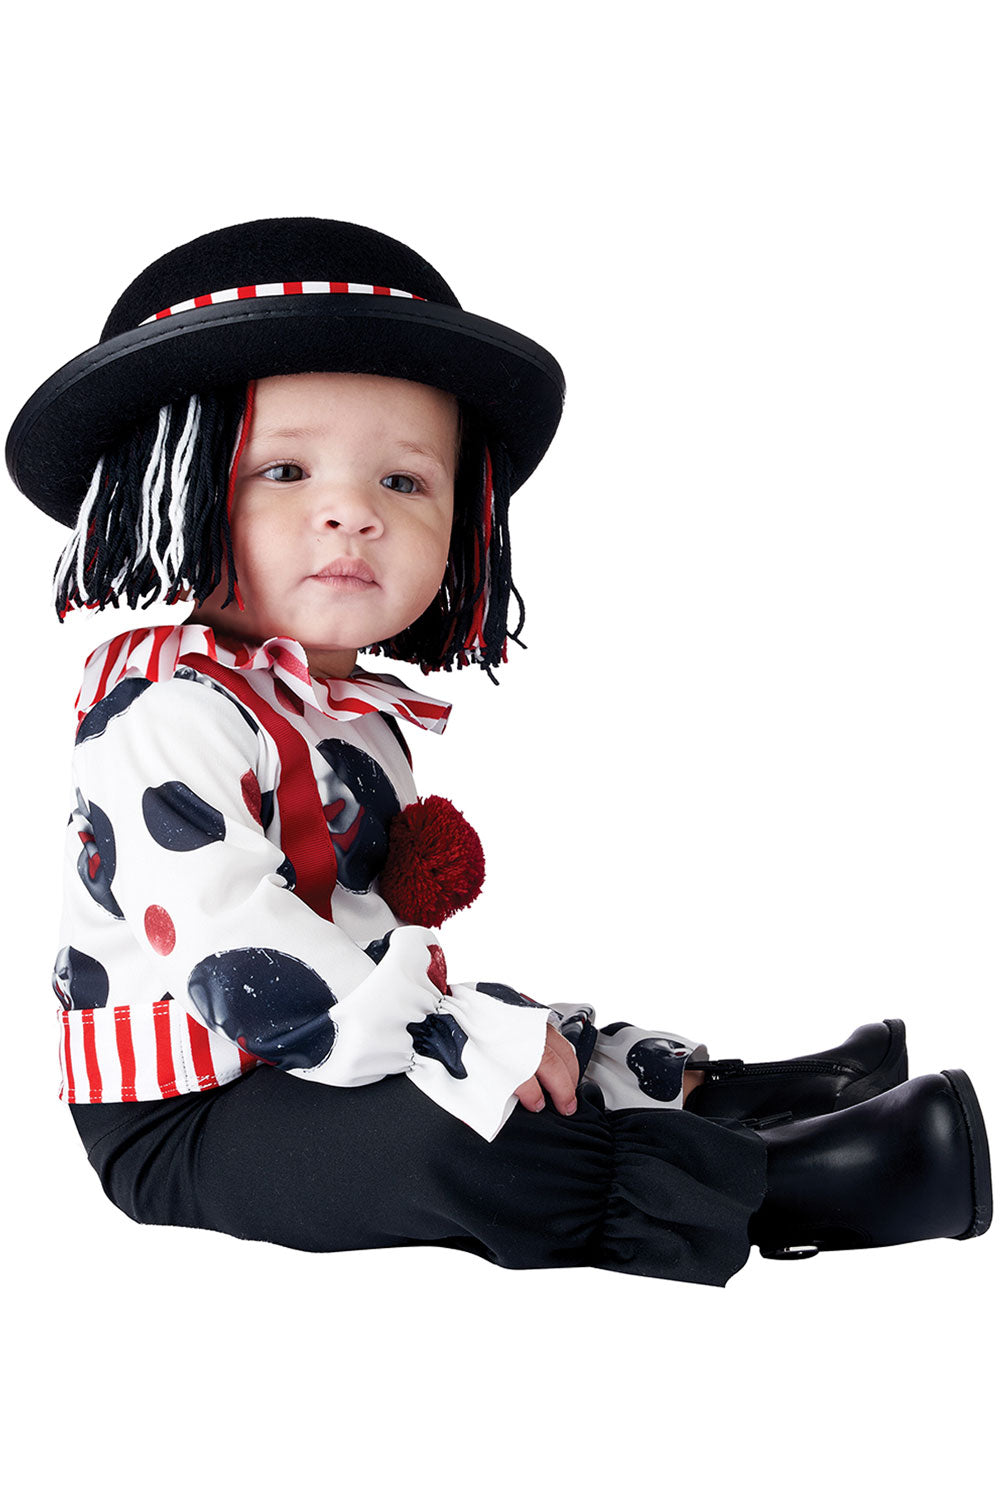 Clownin' Around / Infant California Costume 1121-186